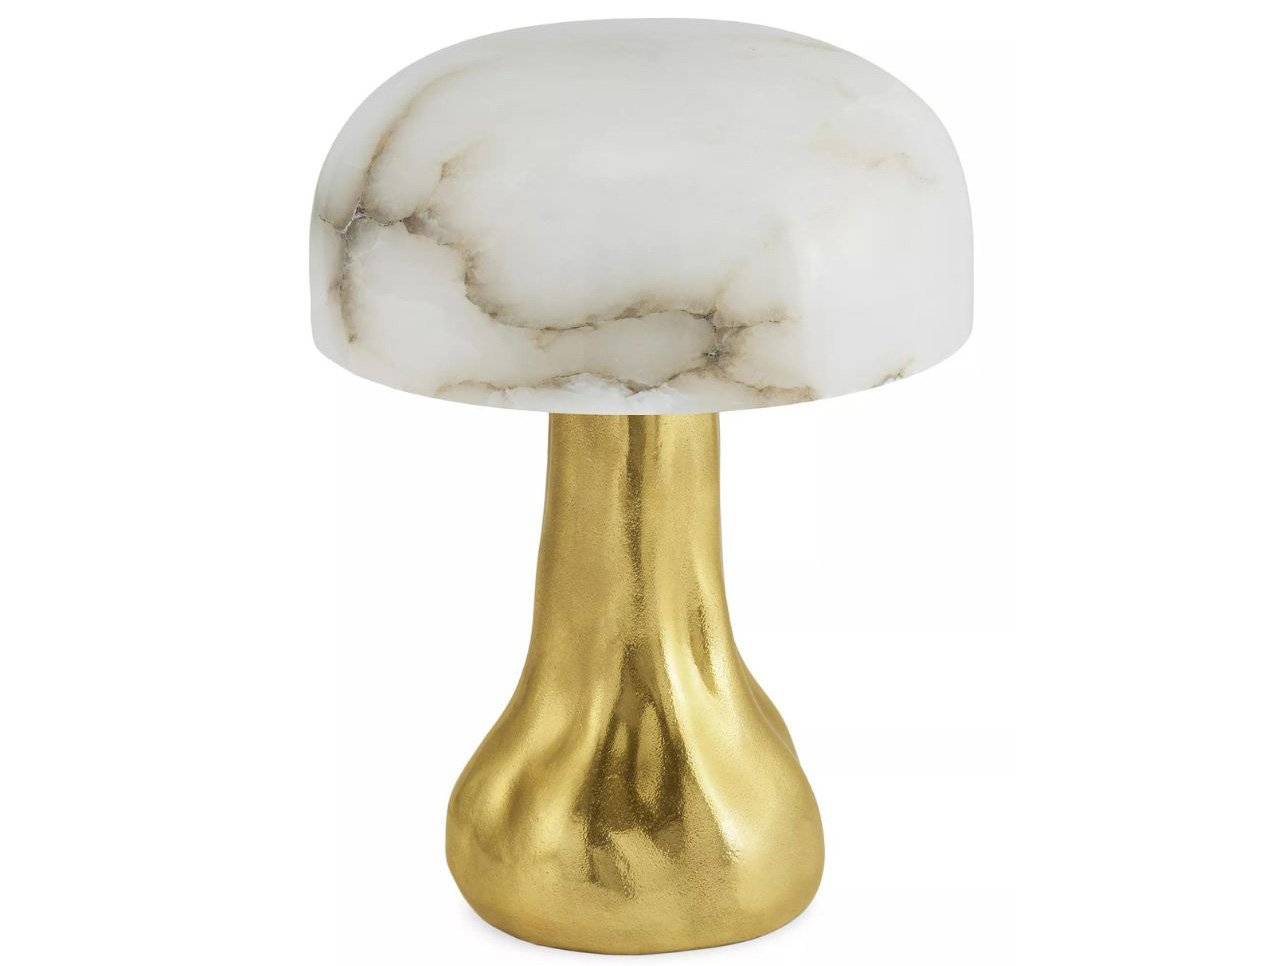 Michael Aram mushroom accent table lamp